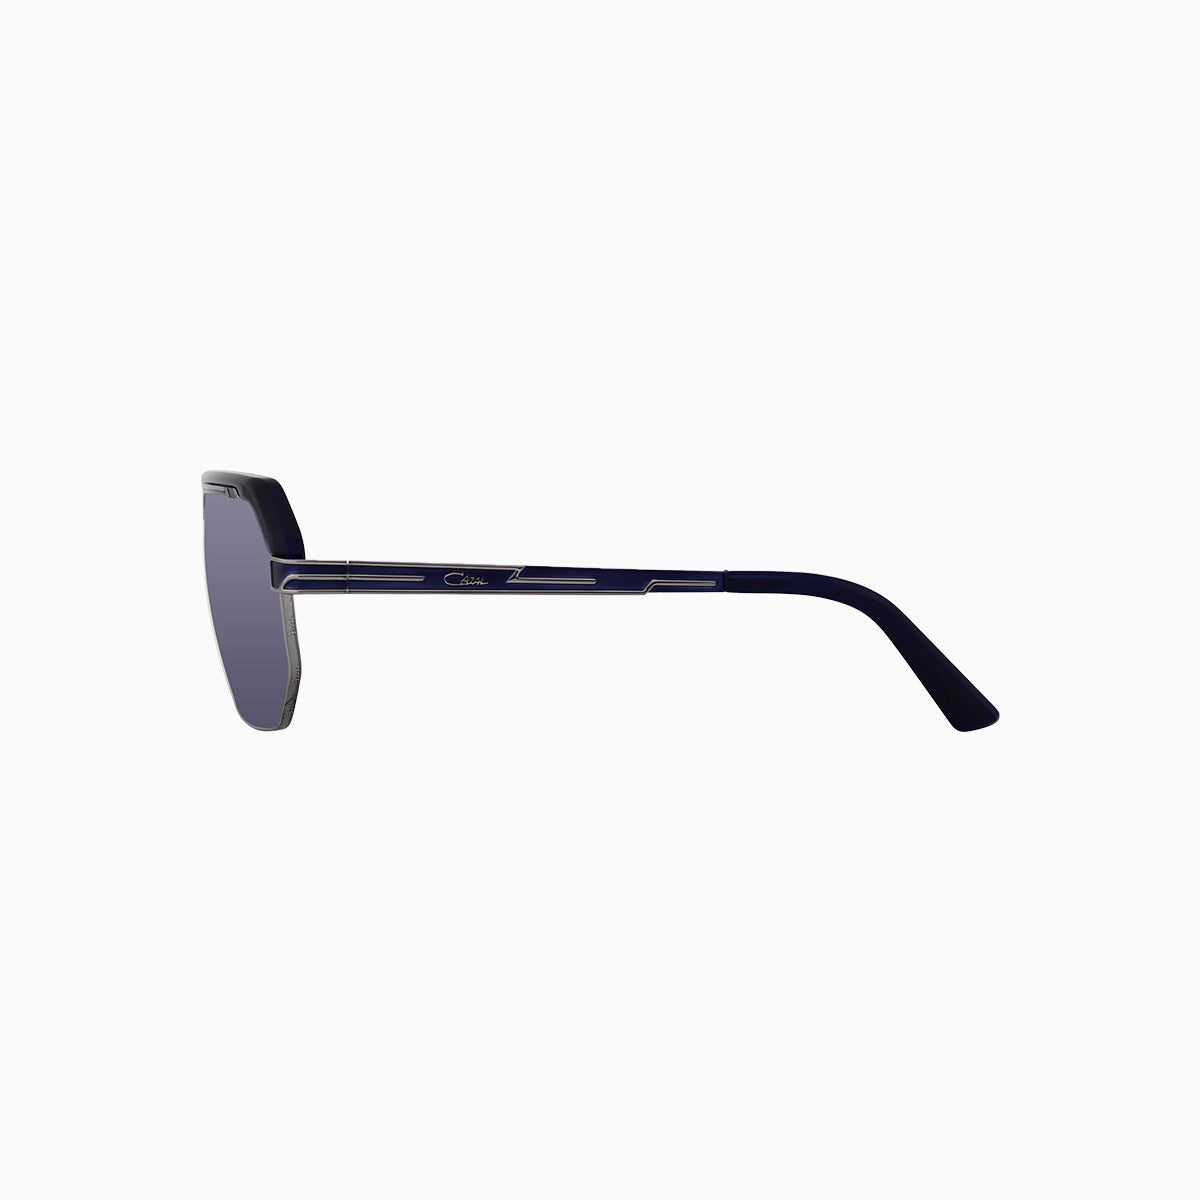 cazal-eyewear-mod-676-cazal-night-blue-gunmetal-sunglasses-676-003